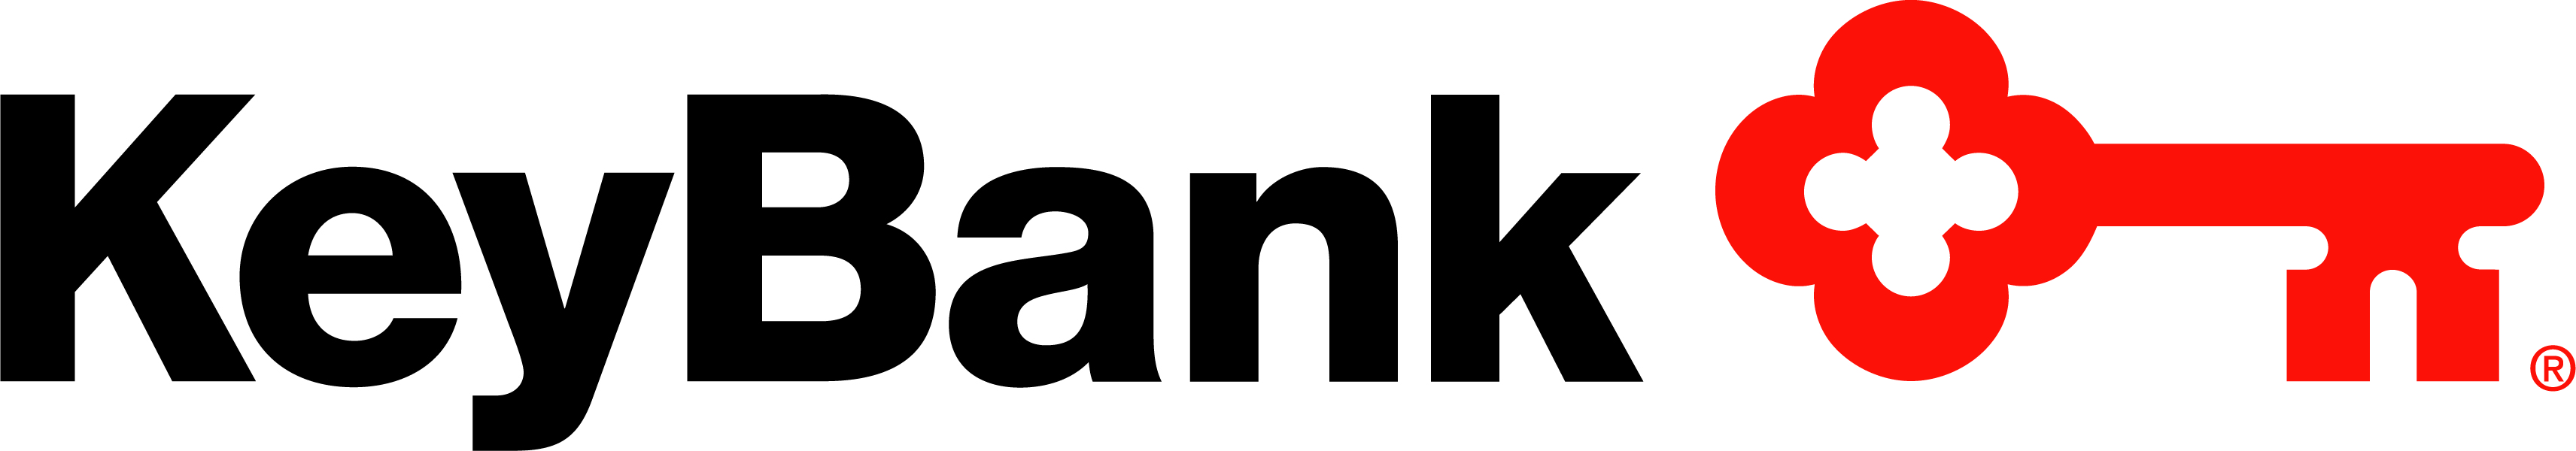 KeyBank-Black-1795-logo.jpg